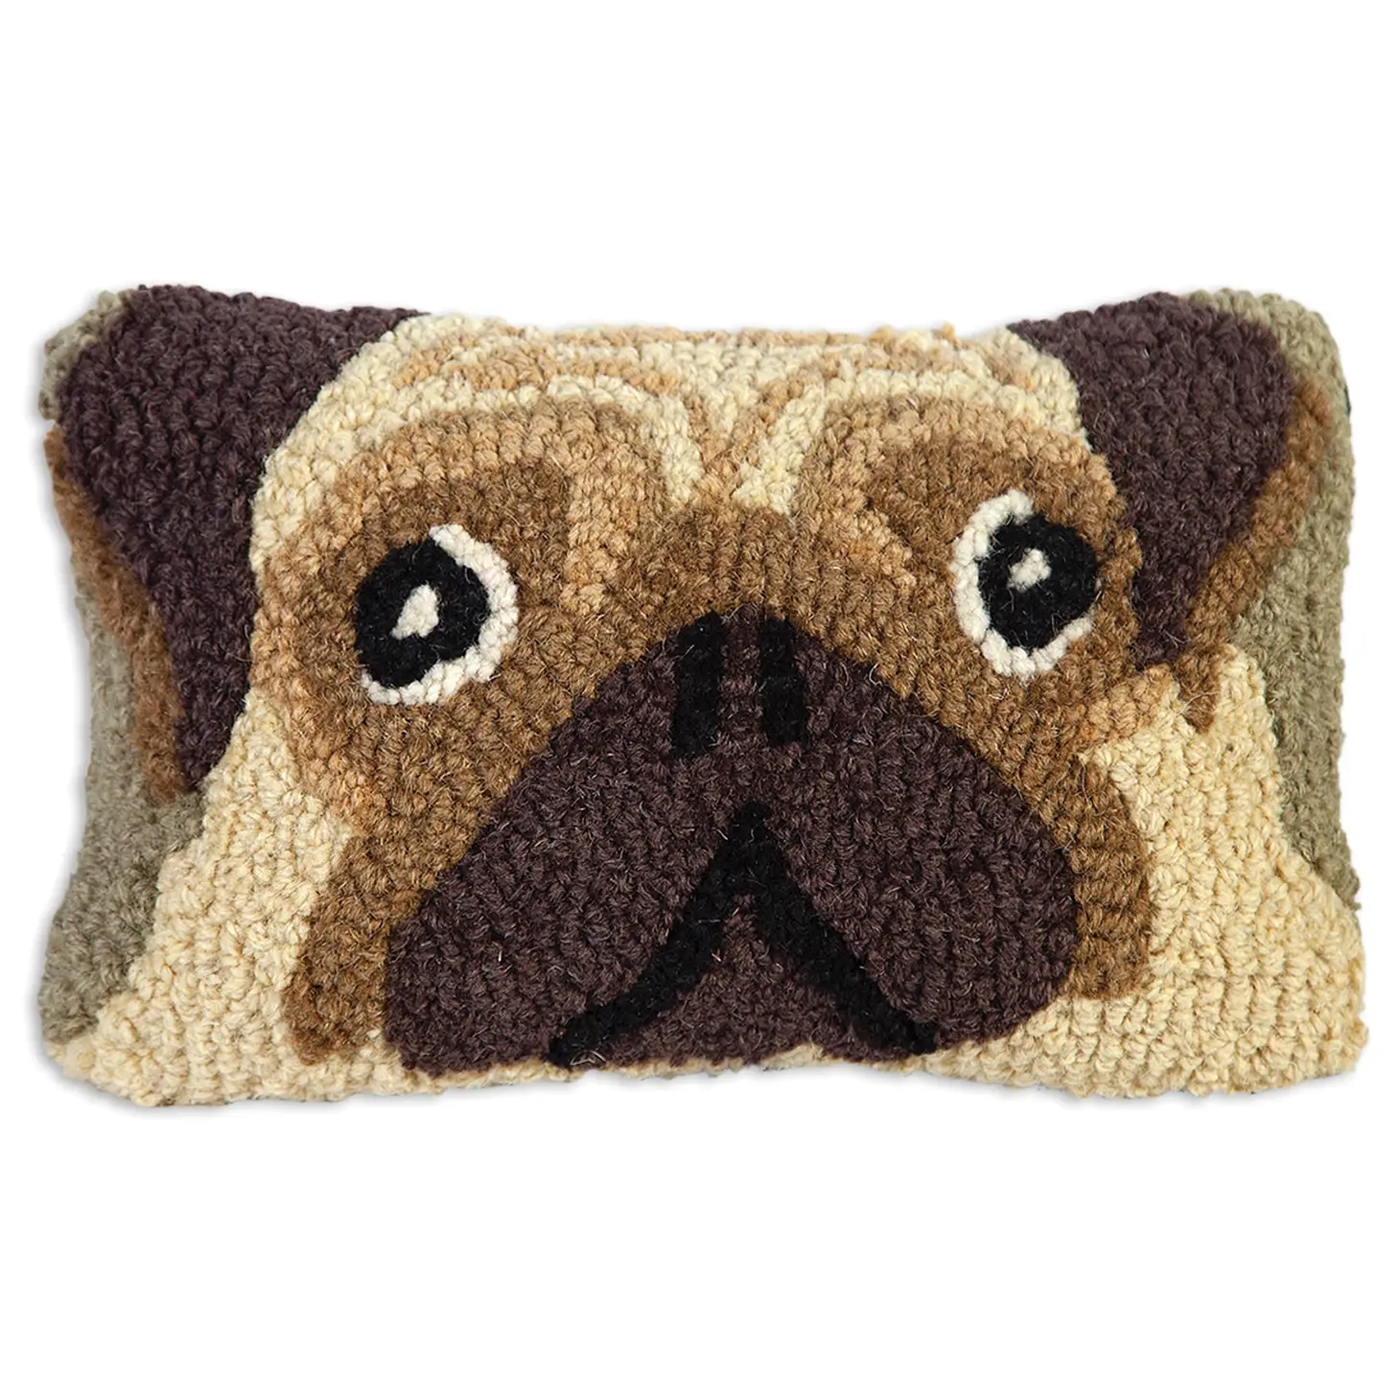 Peewee Pug Pillow